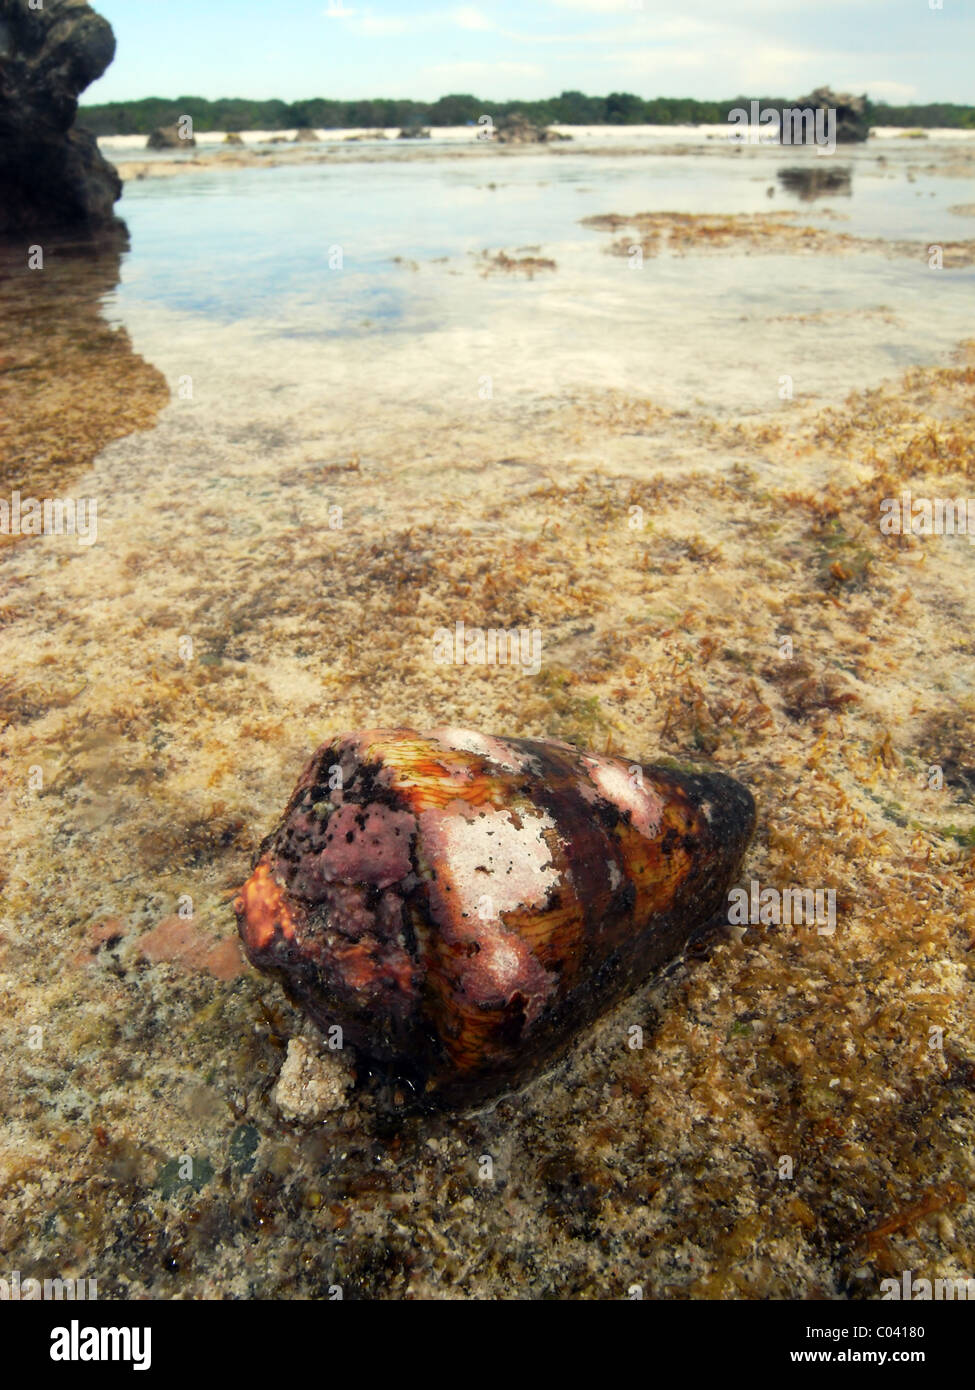 Live venomous cone shell (Conus sp.) on reef flat, North West Island, Great Barrier Reef Marine Park, Queensland, Australia Stock Photo